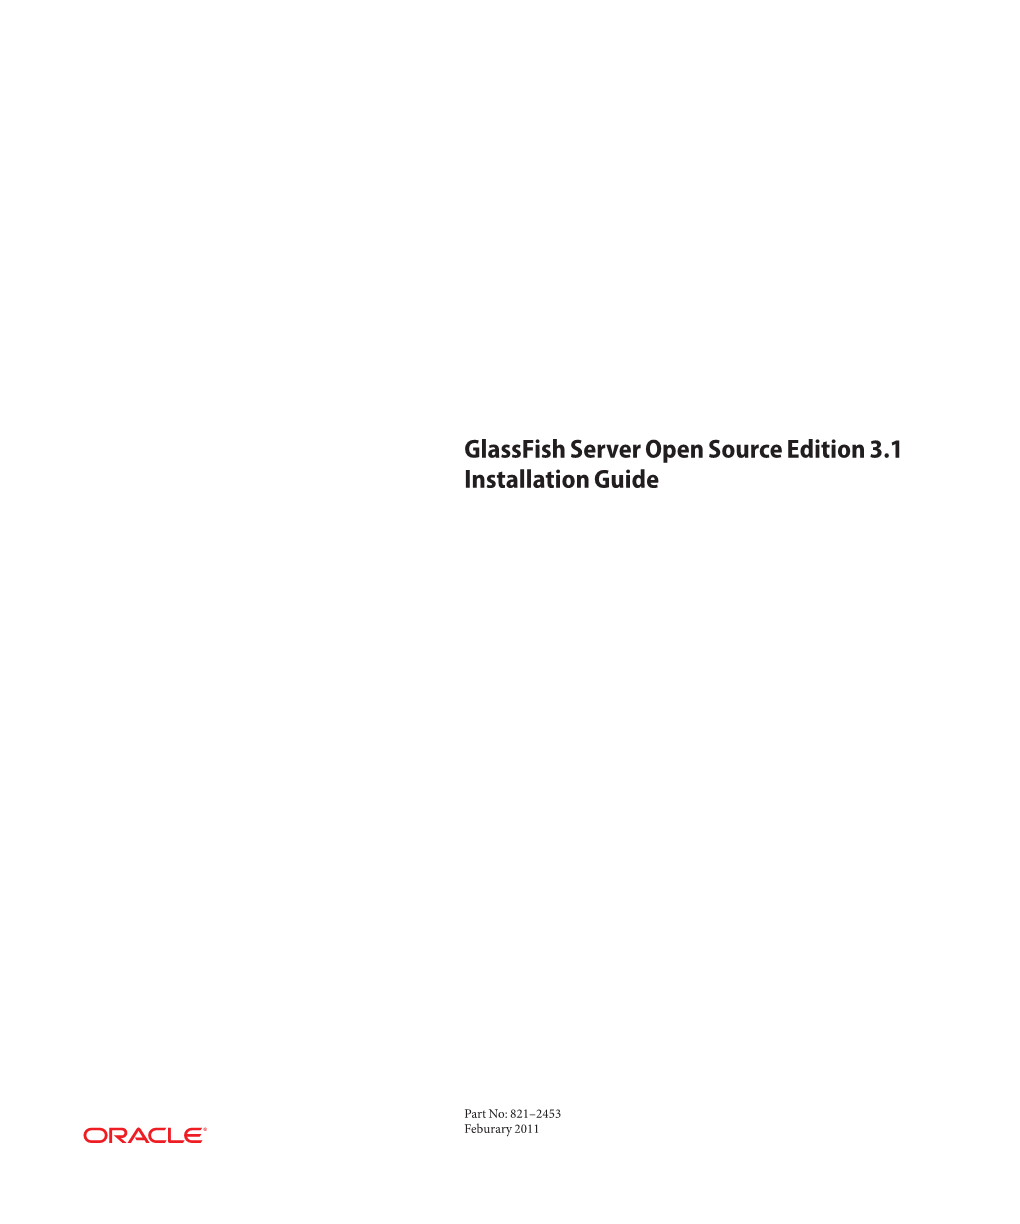 Glassfish Server Open Source Edition 3.1 Installation Guide